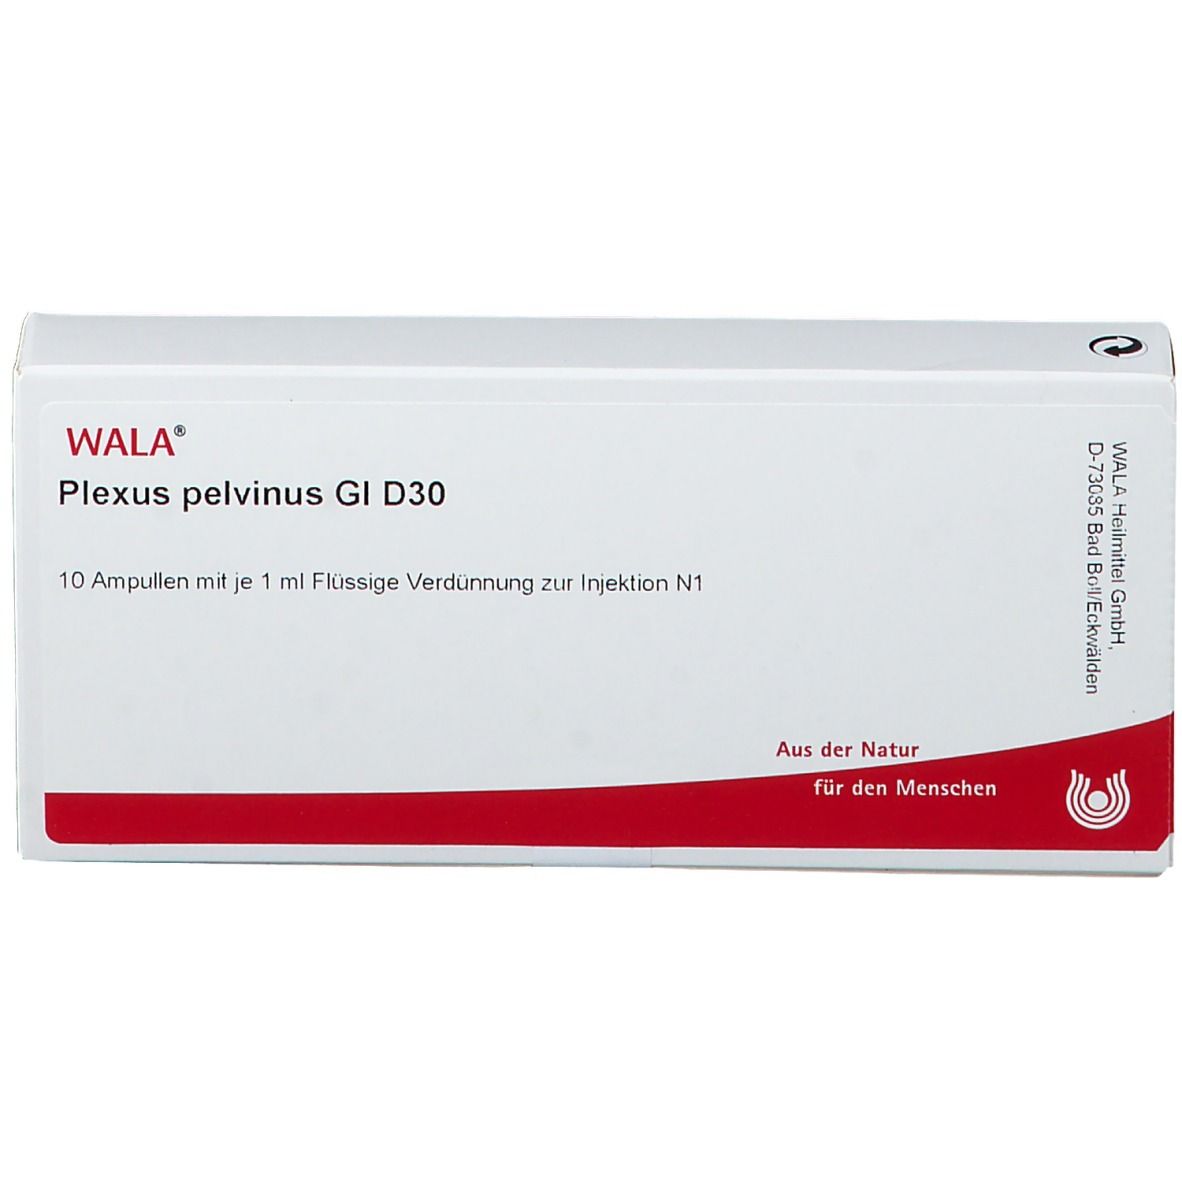 WALA® Plexus pelvinus Gl D 30